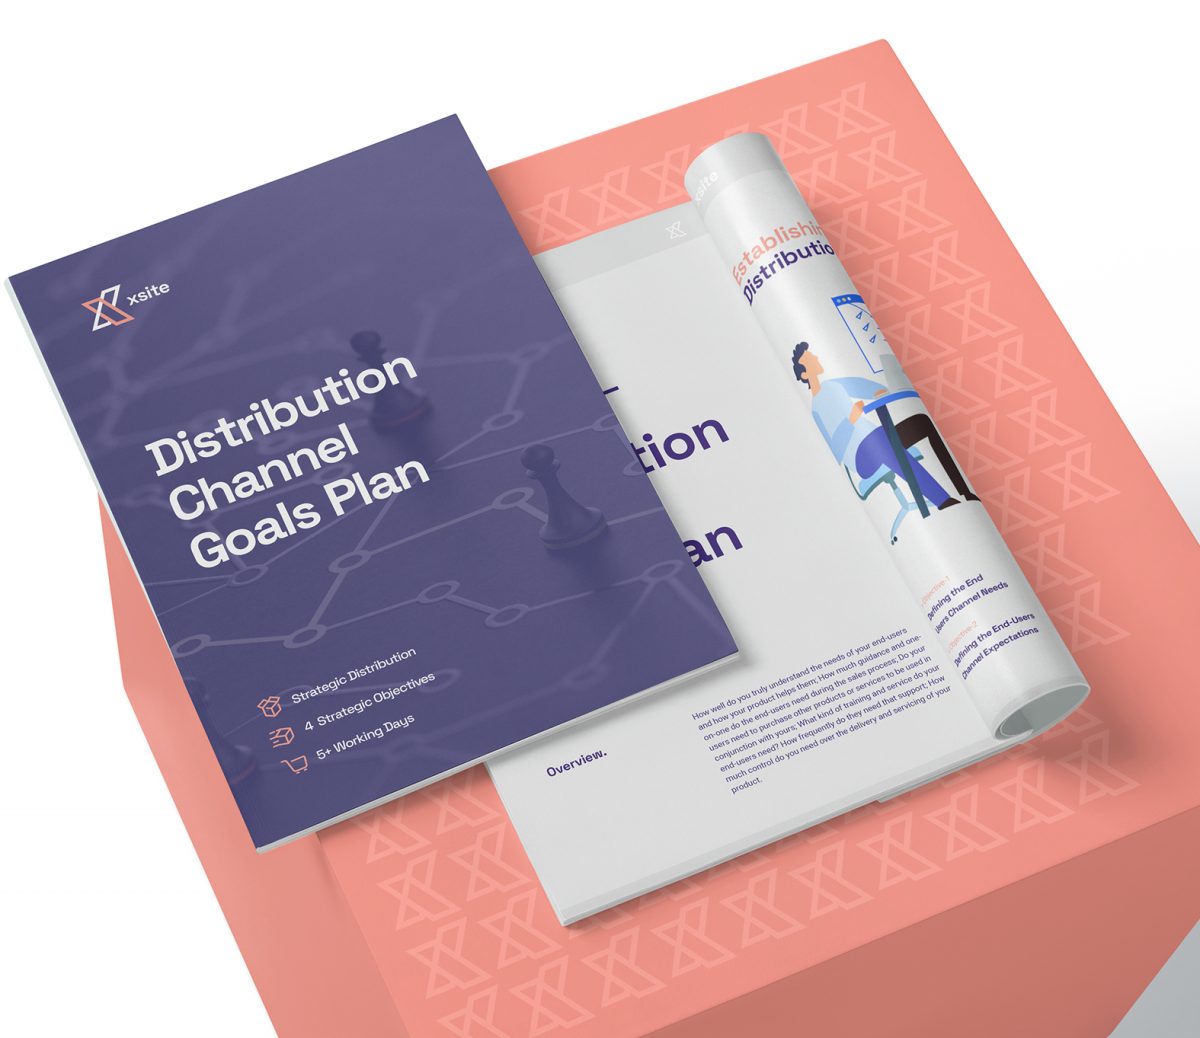 Distribution Channel Goals Plan